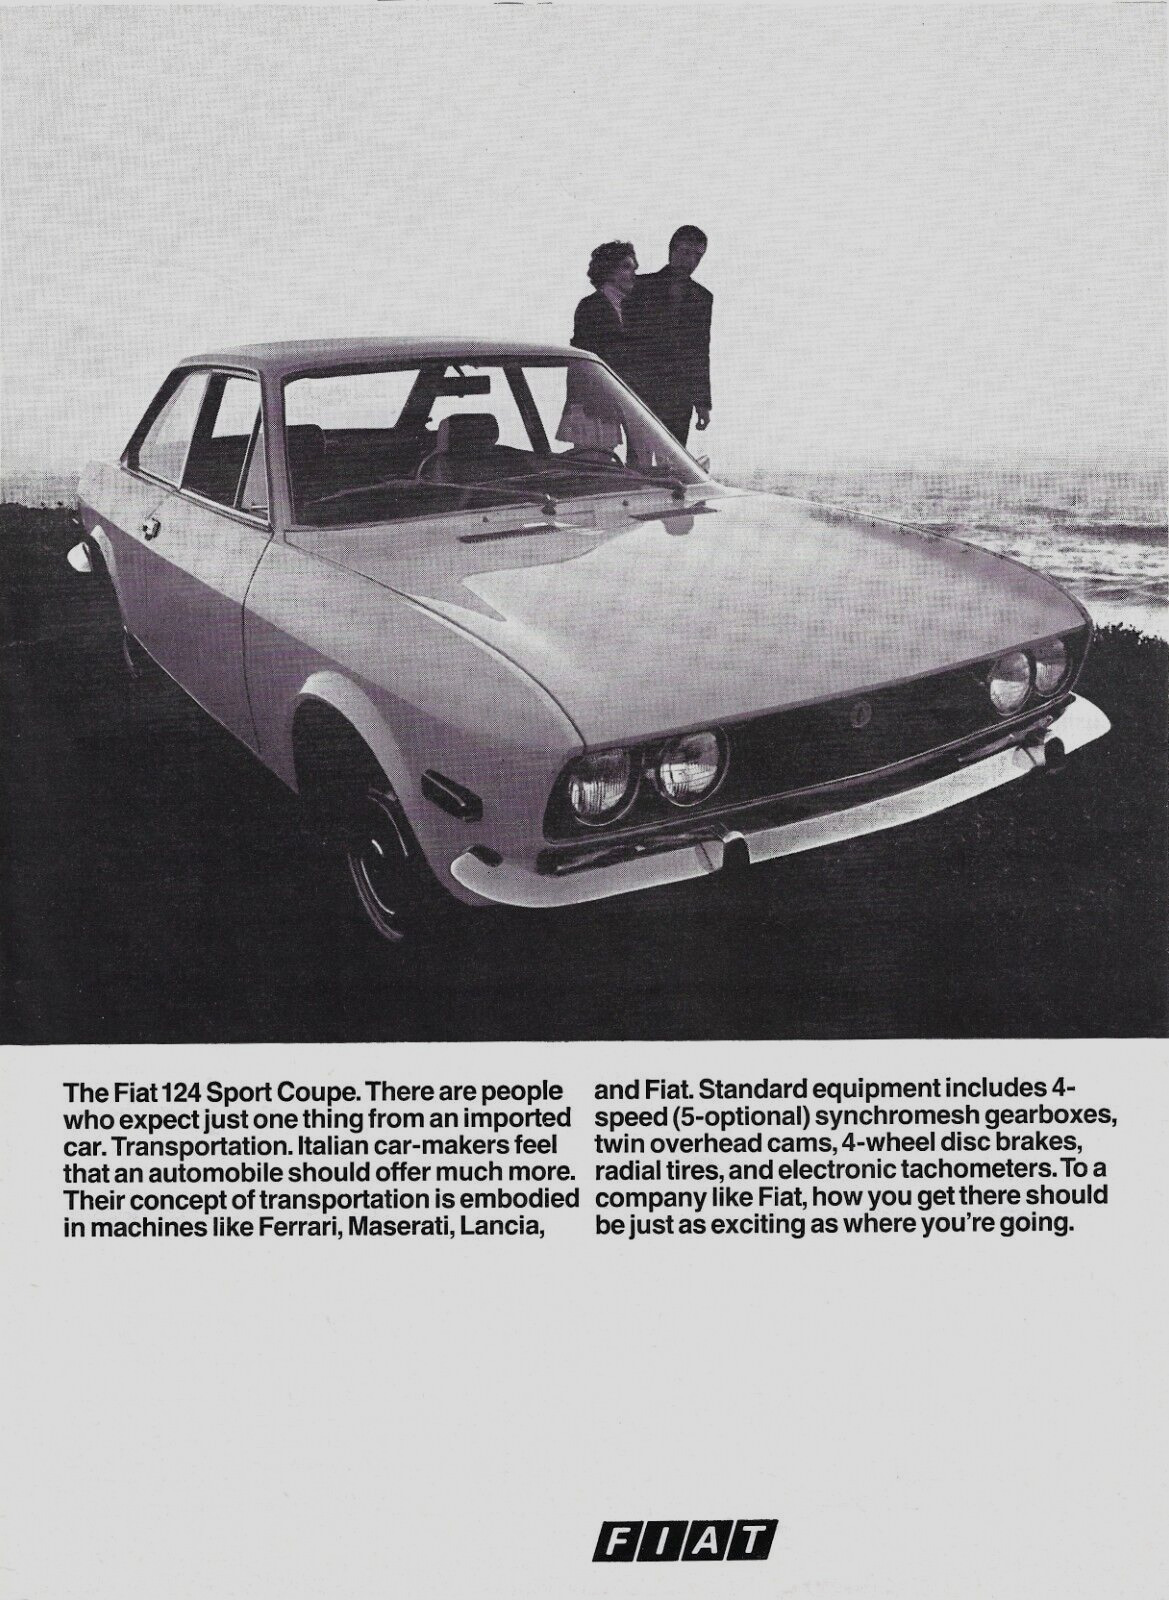 1970 Fiat 124 Sport Coupe Italian Car Couple Beach Photo Original Print Ad